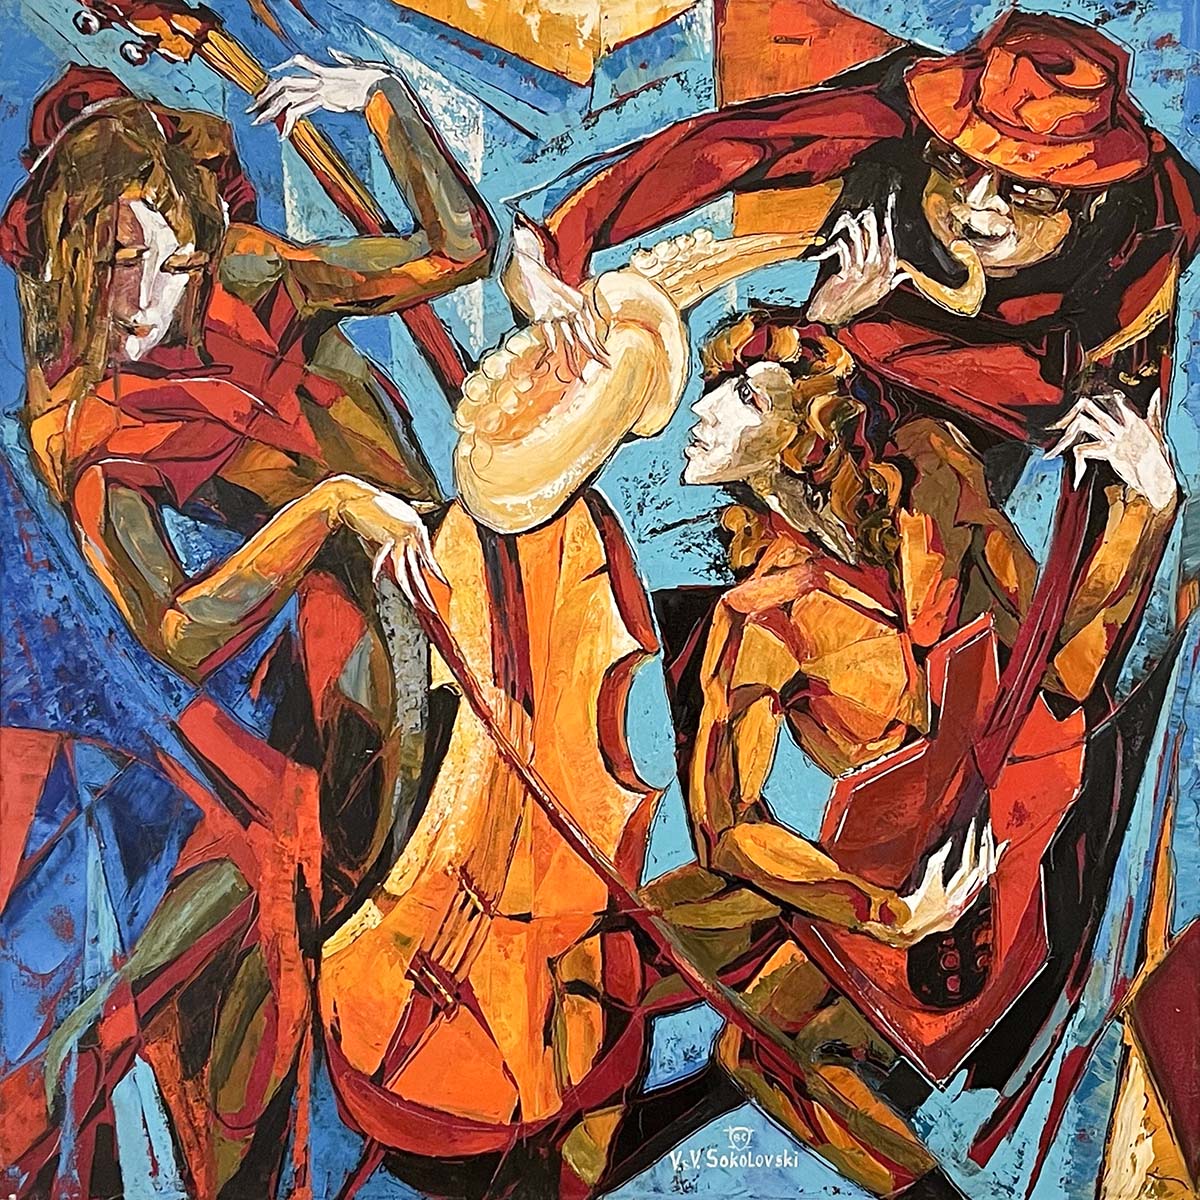 Contemporary art. Title: Virtuoso, Oil on Canvas, 36x36 in by Contemporary Canadian artist Valeri Sokolovski.